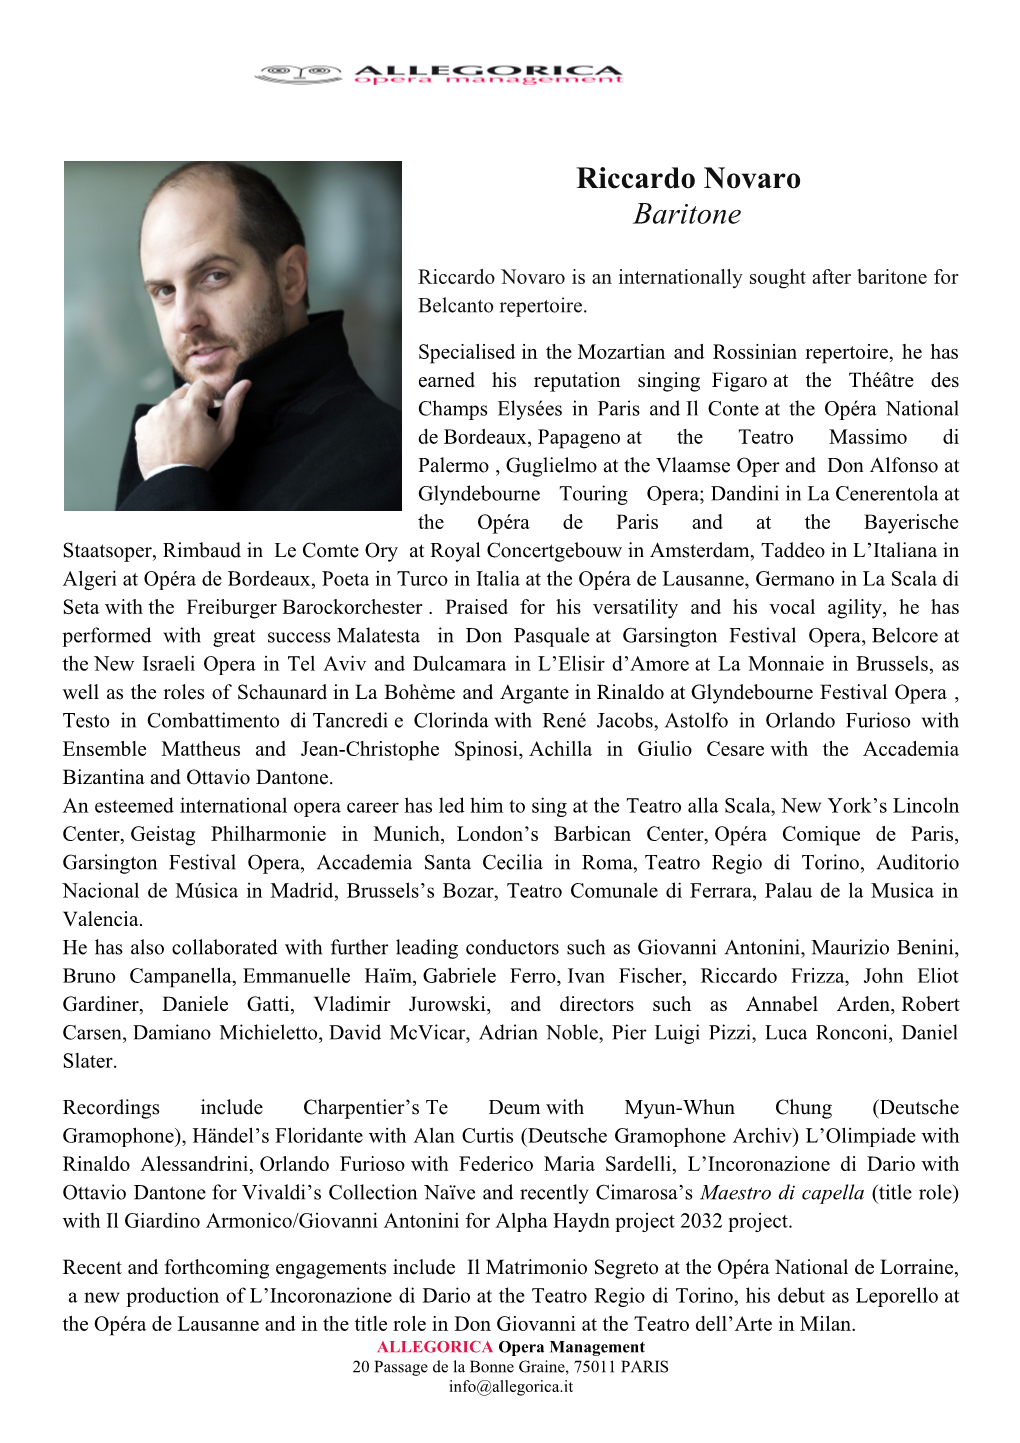 Riccardo Novaro Is an Internationally Sought After Baritone for Belcanto Repertoire